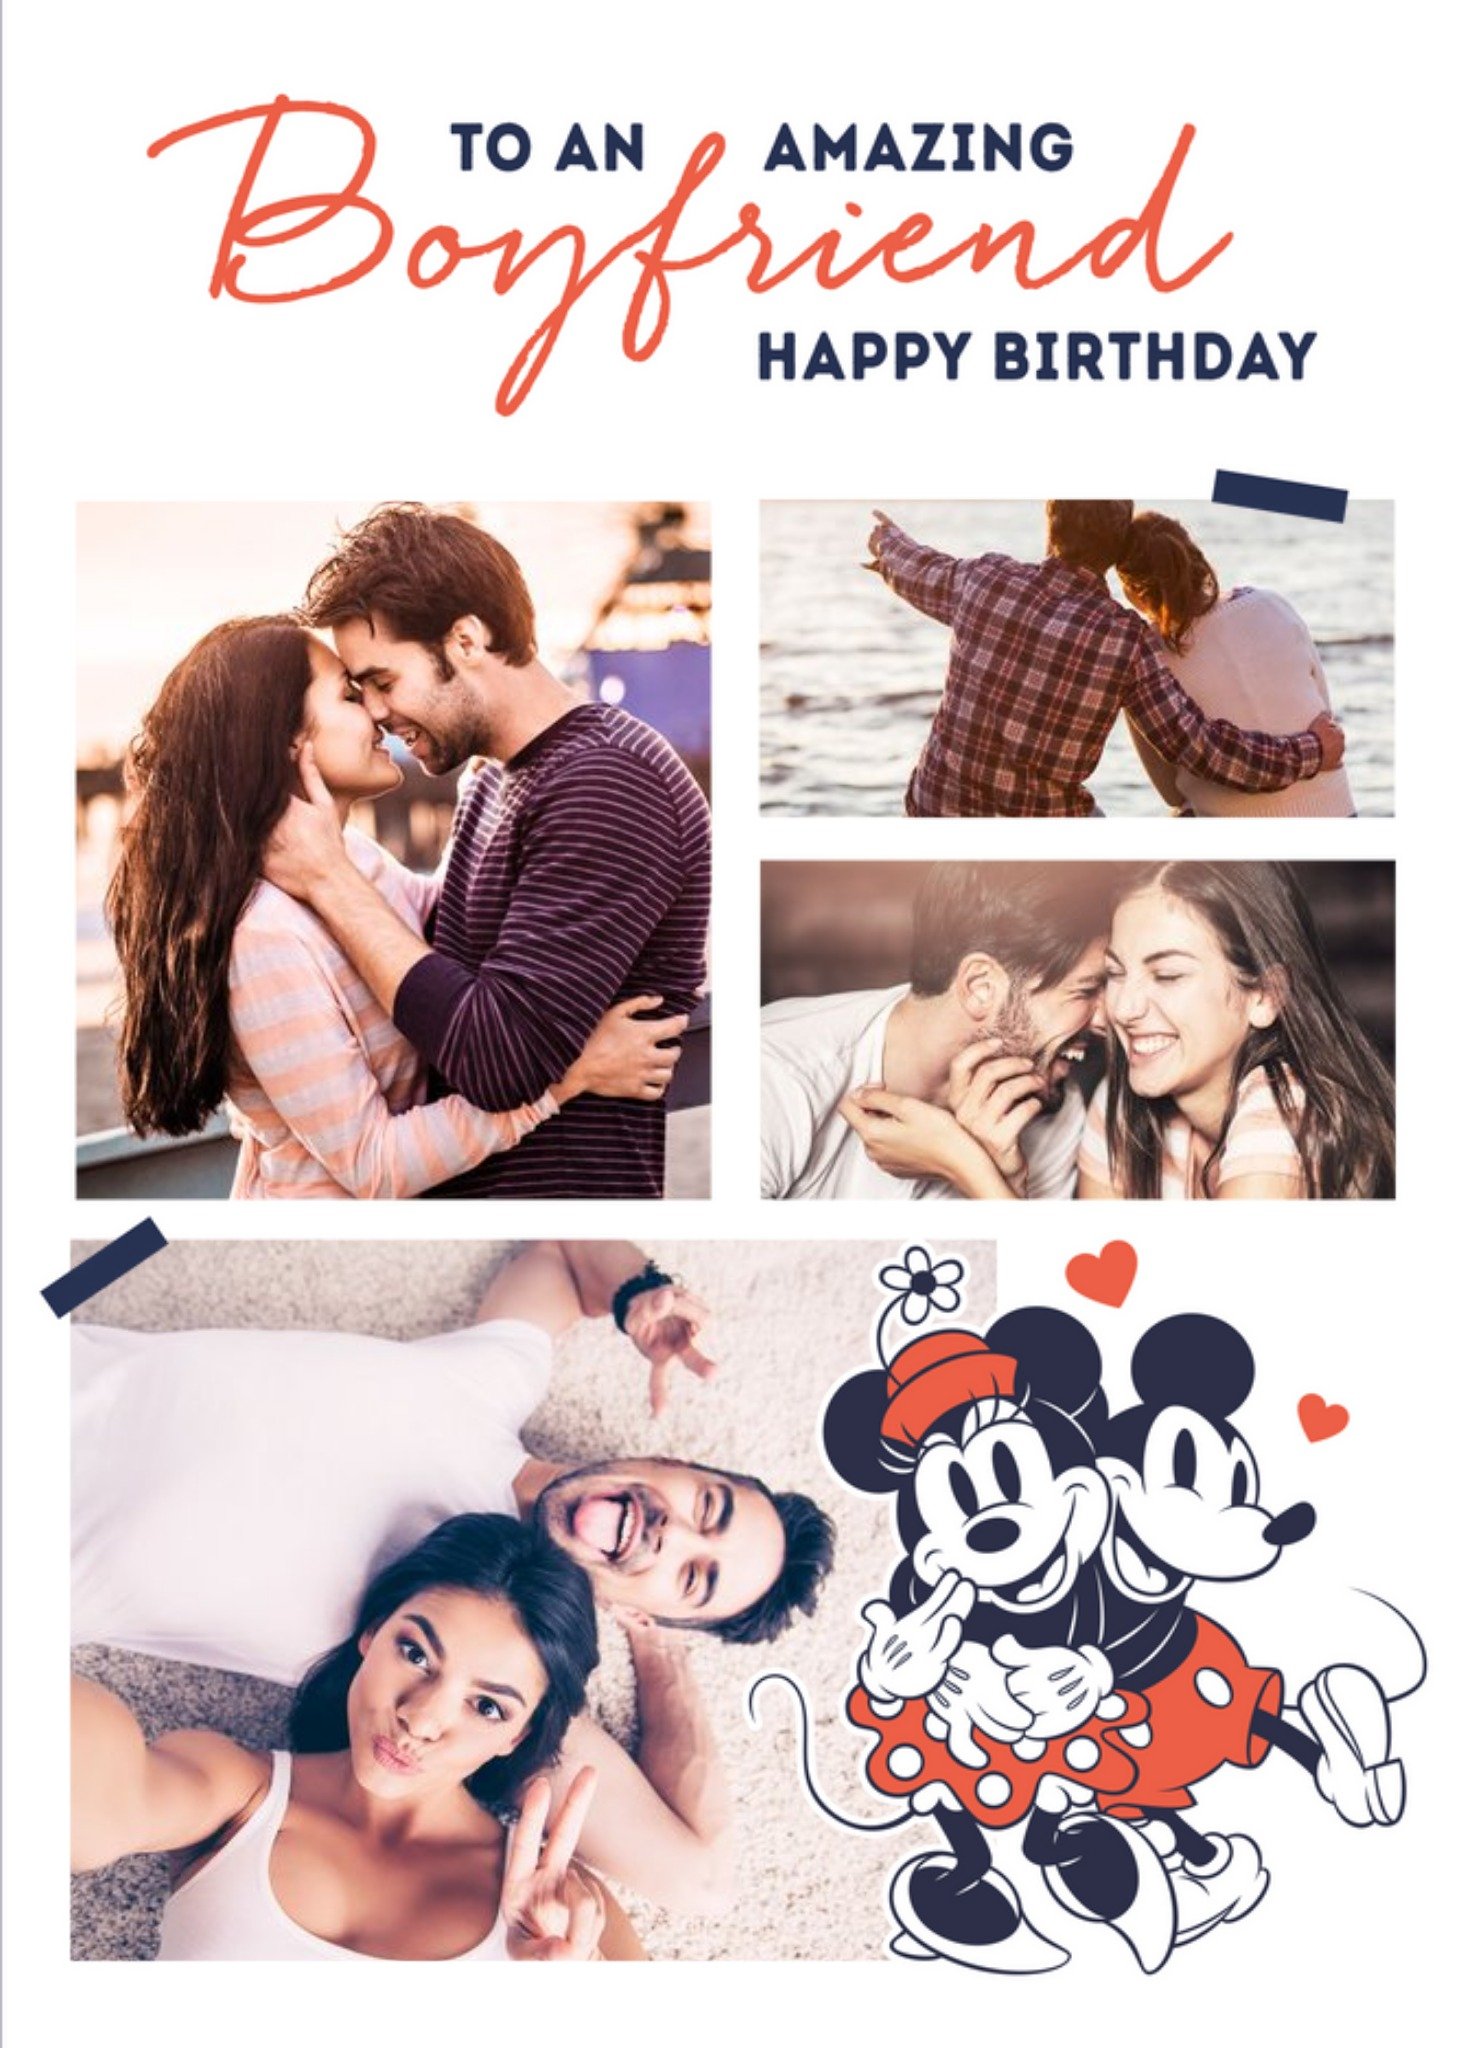 Mickey Mouse Mickey & Minnie Mouse Amazing Boyfriend Photo Upload Birthday Card, Large